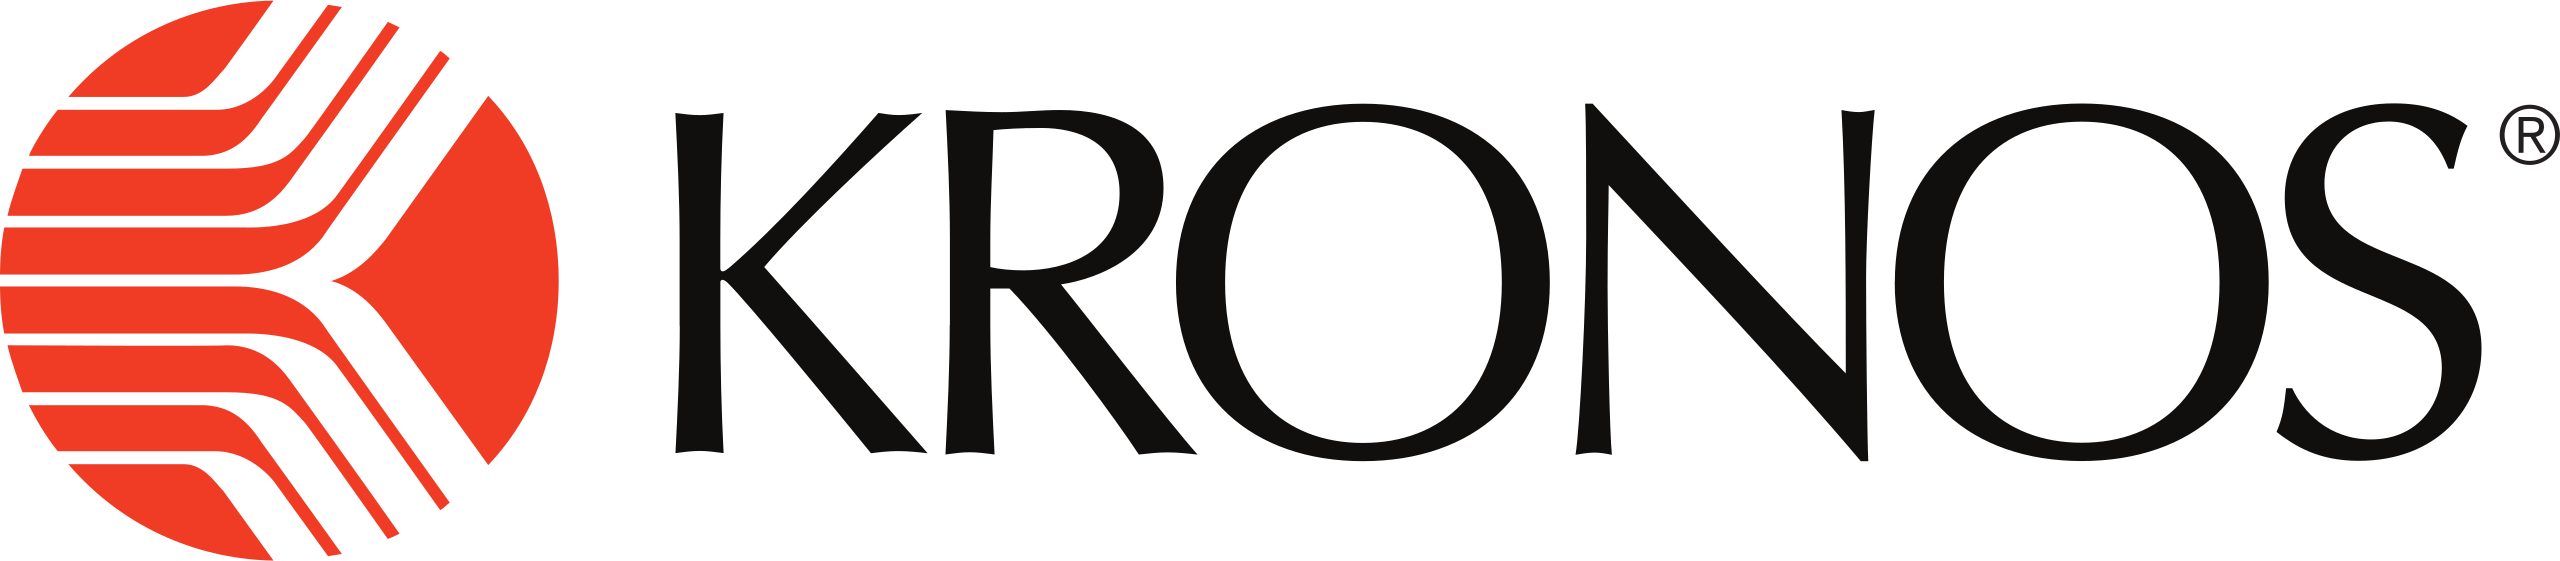 Kronos_Incorporated_logo.svg